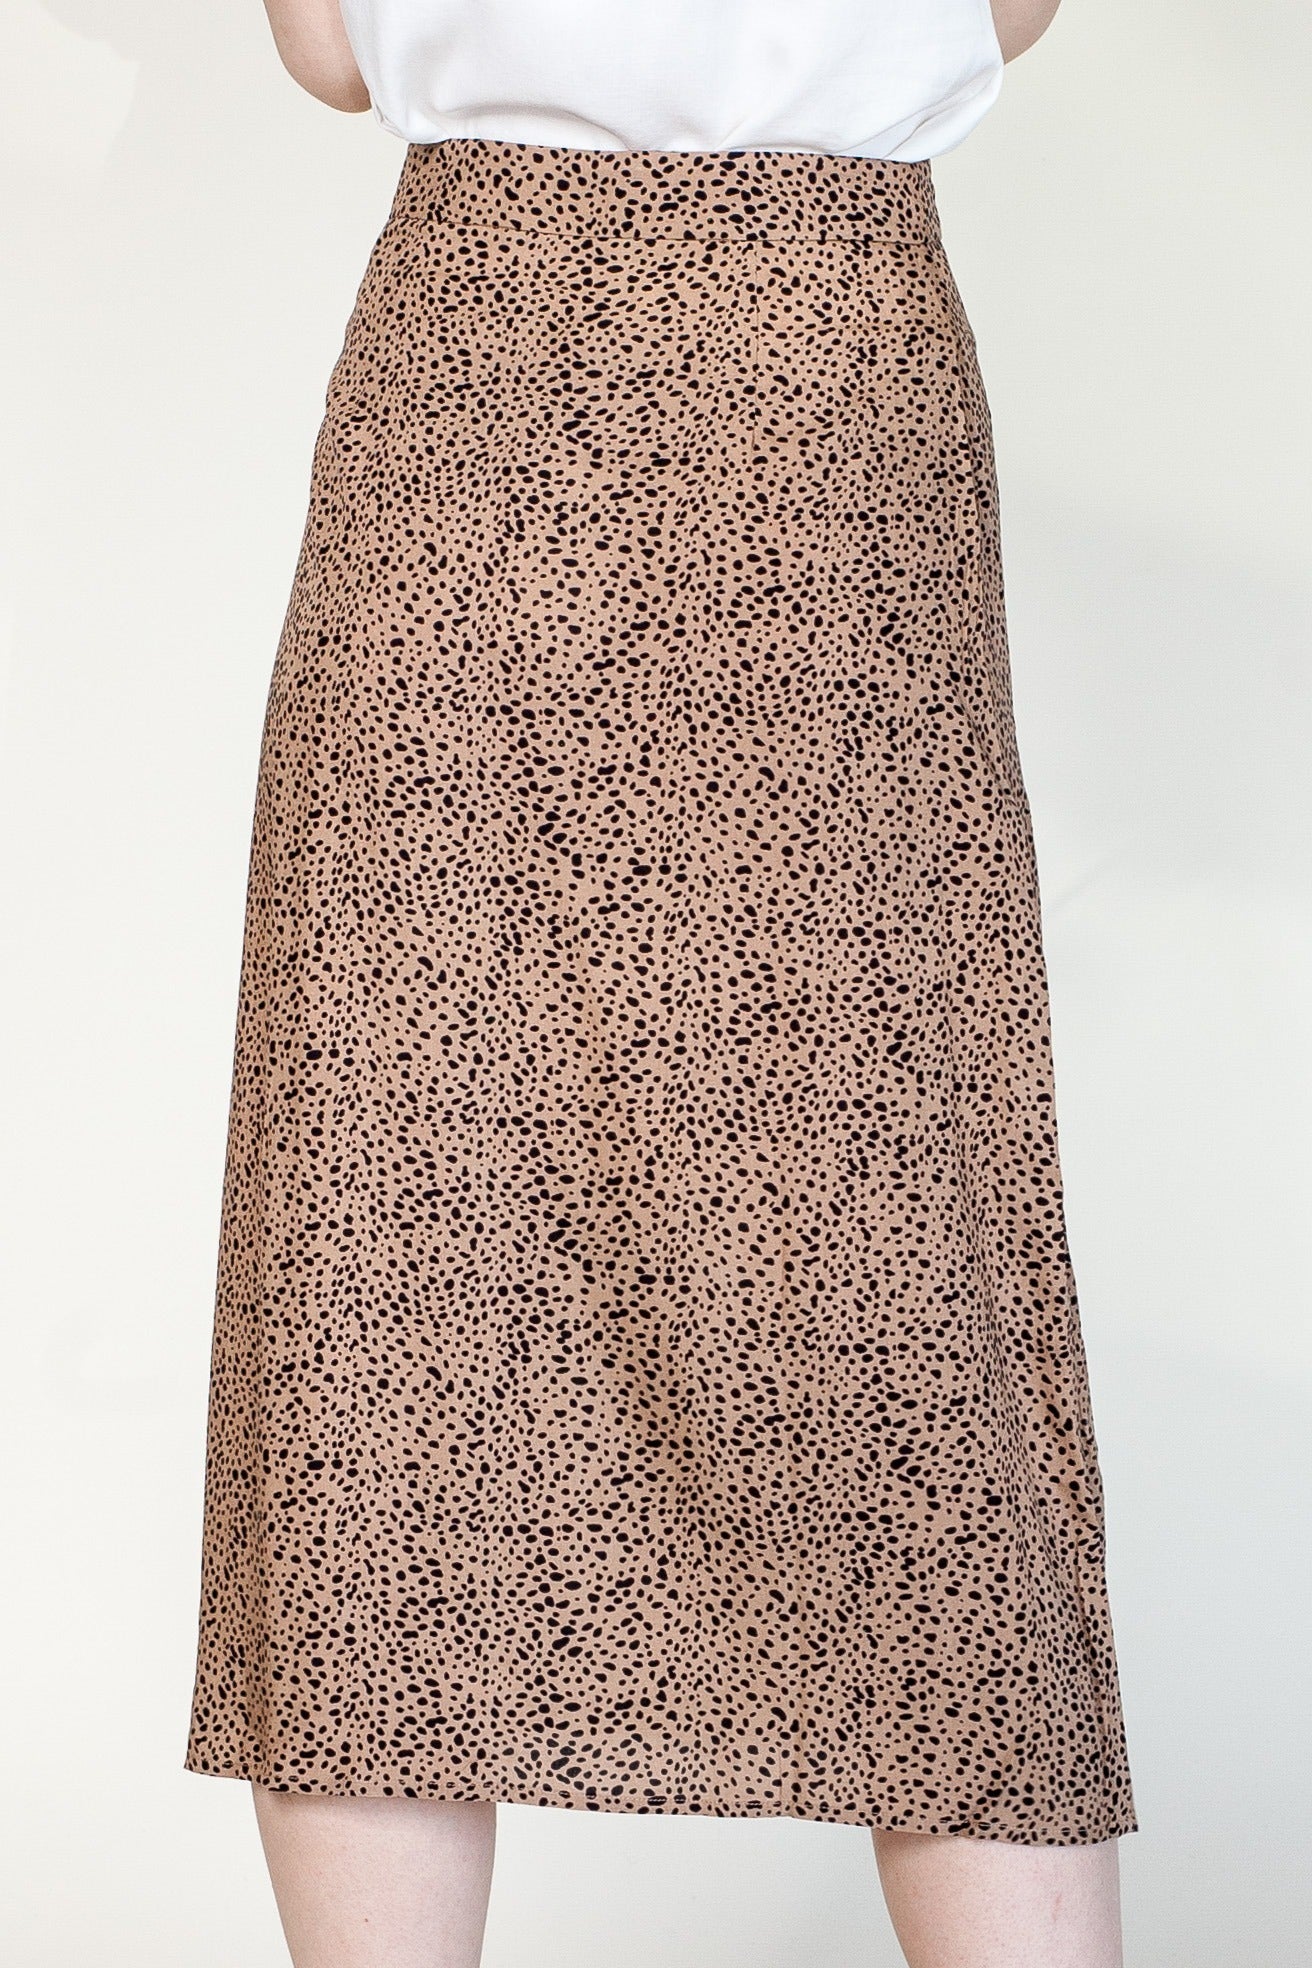 Sahara Skirt- Beige - Pink Martini Collection